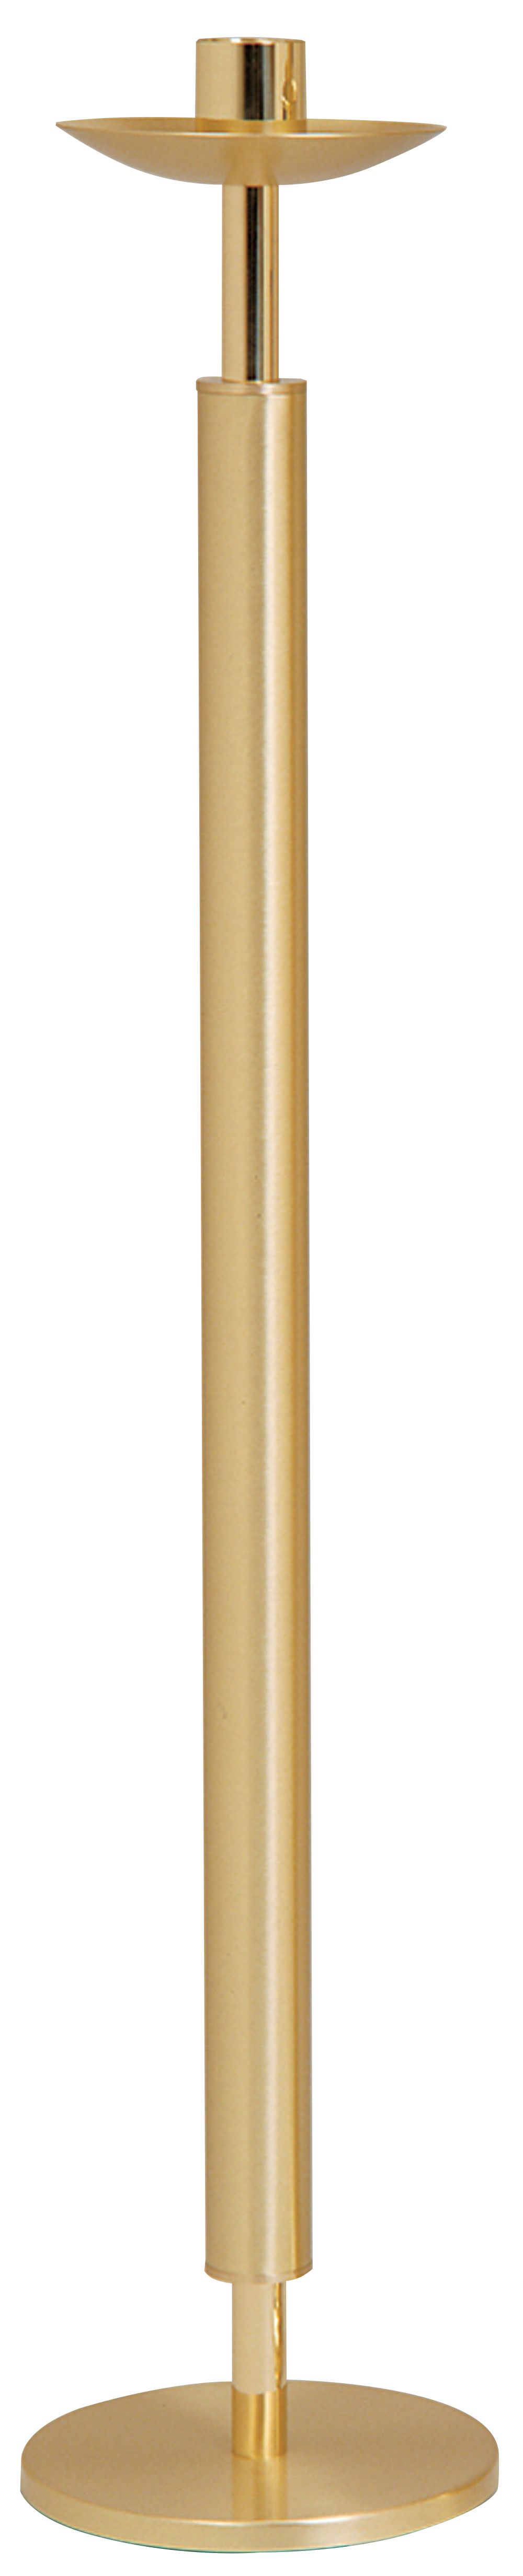 Paschal Candlestick 42 inch Brass 1 15/16 inch Socket